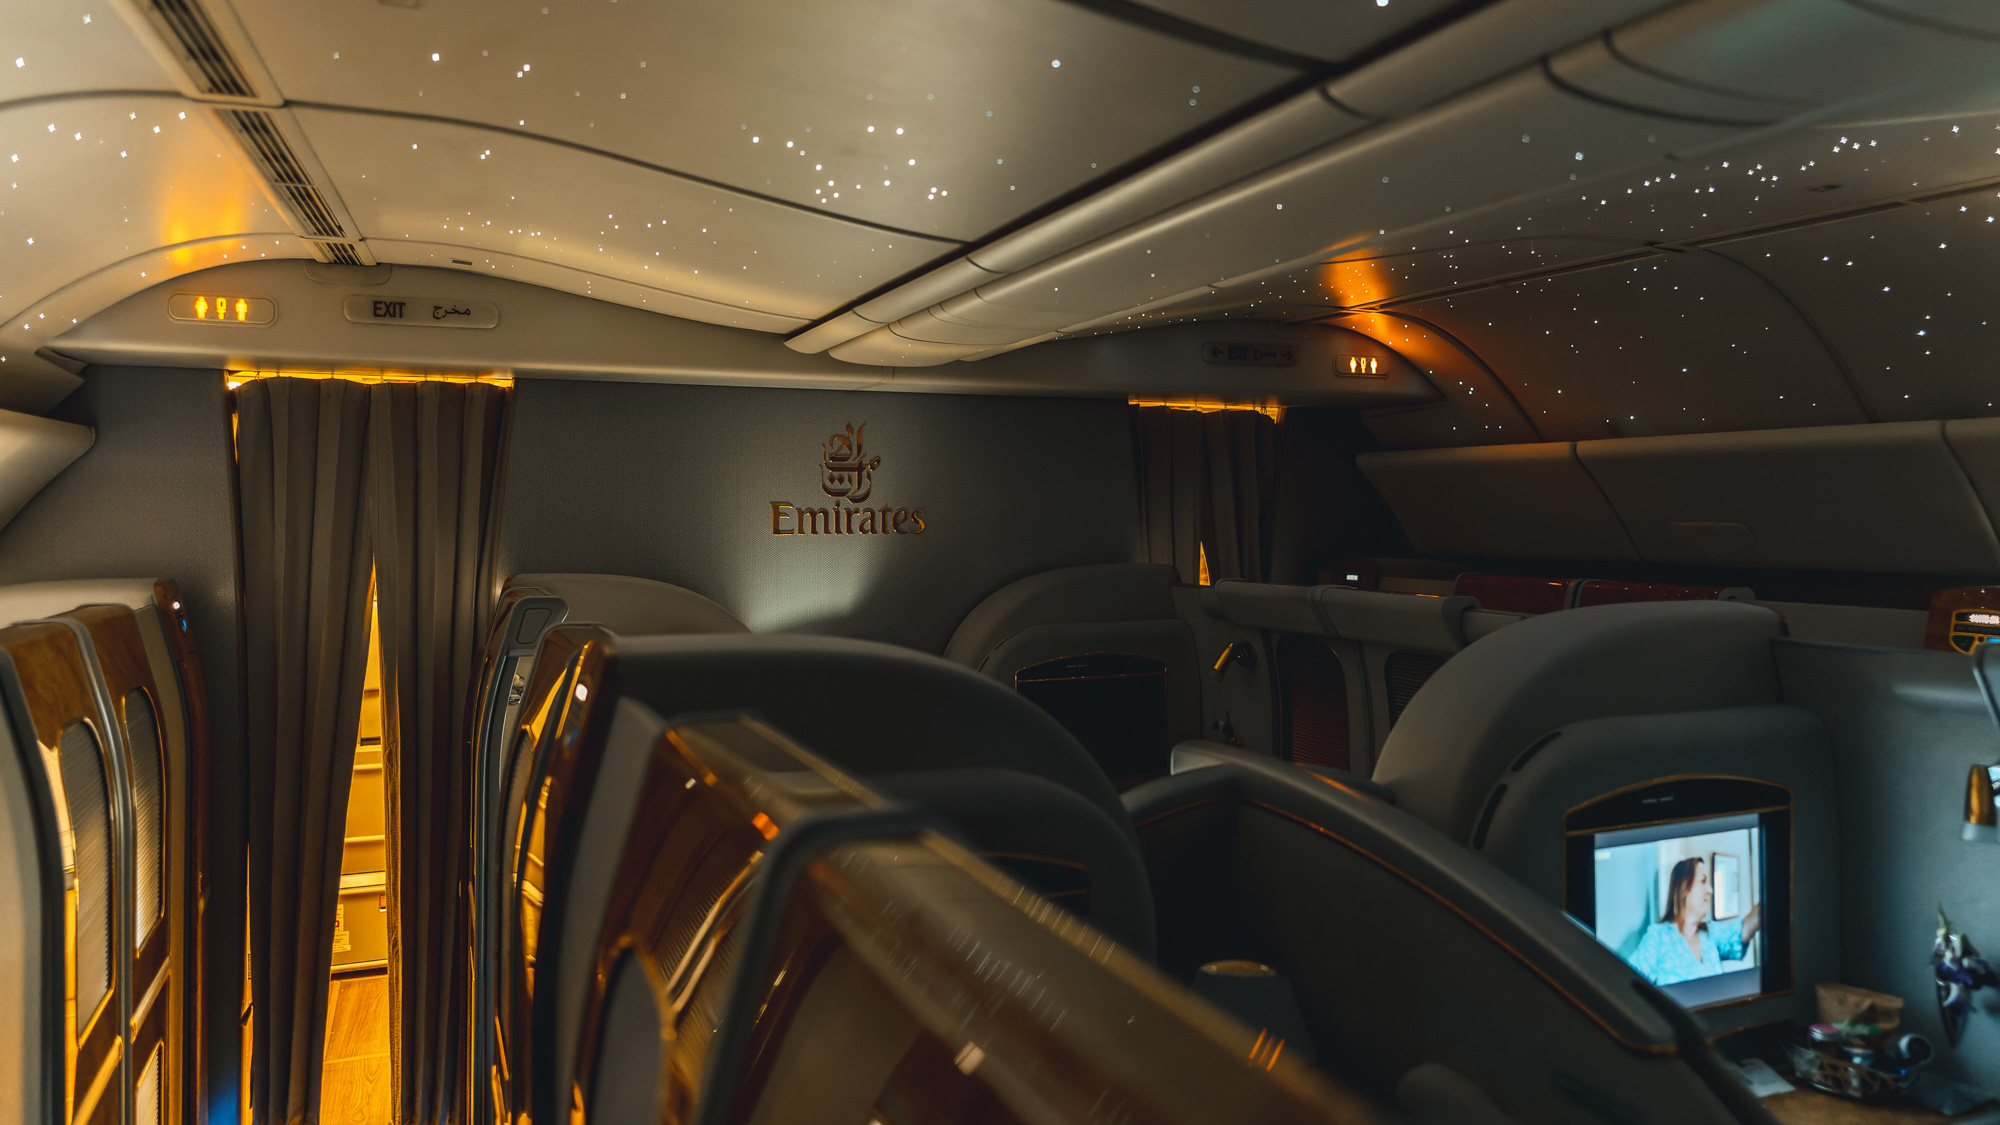 Emirates Boeing 777 First class cabin stars